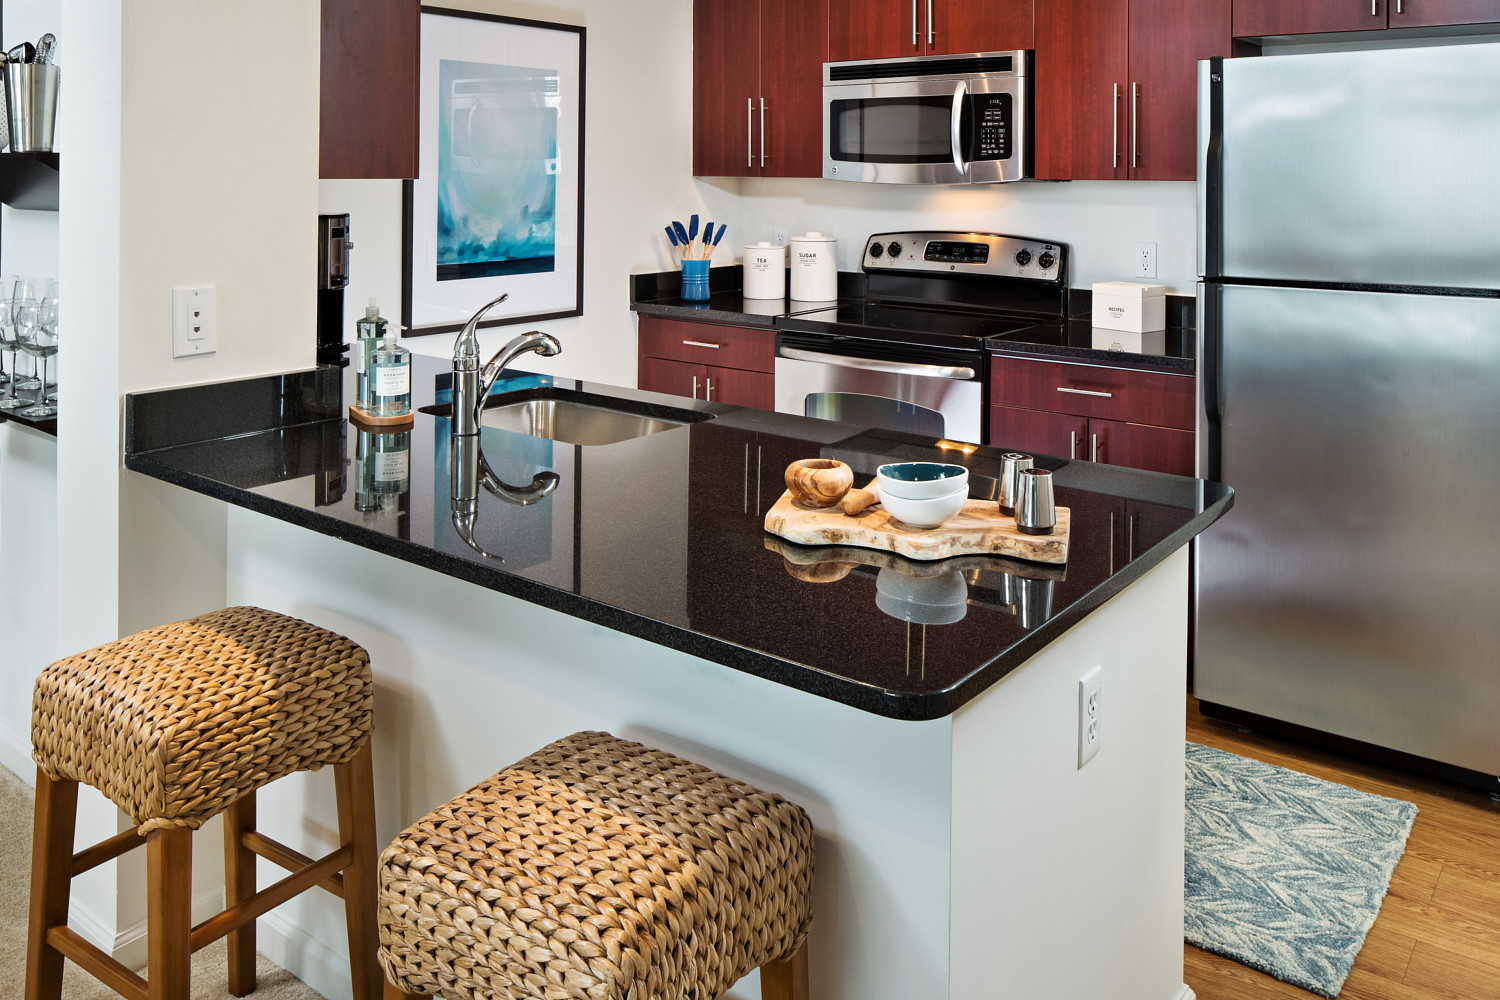 909 : Extraoridinary kitchens with granite countertops